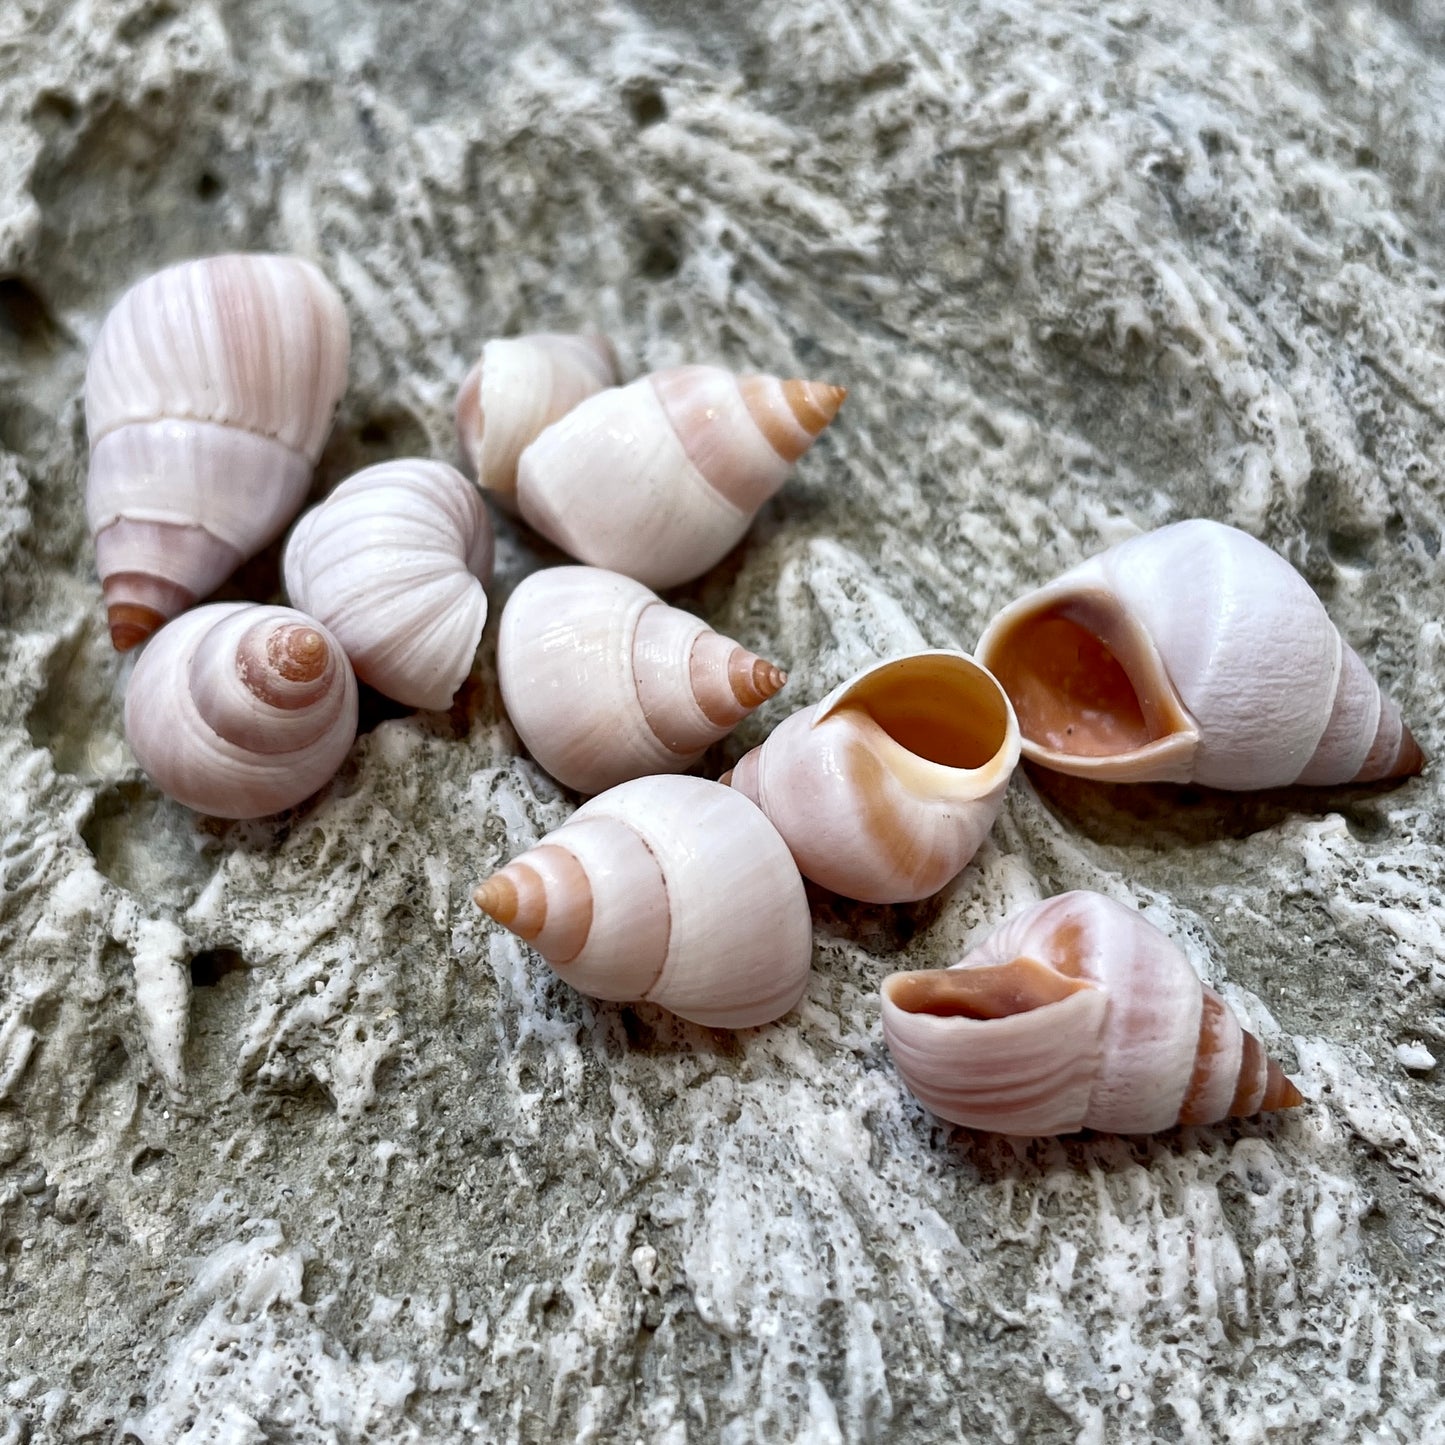 Shells from Tahiti (UNDRILLED) - 10 pcs.